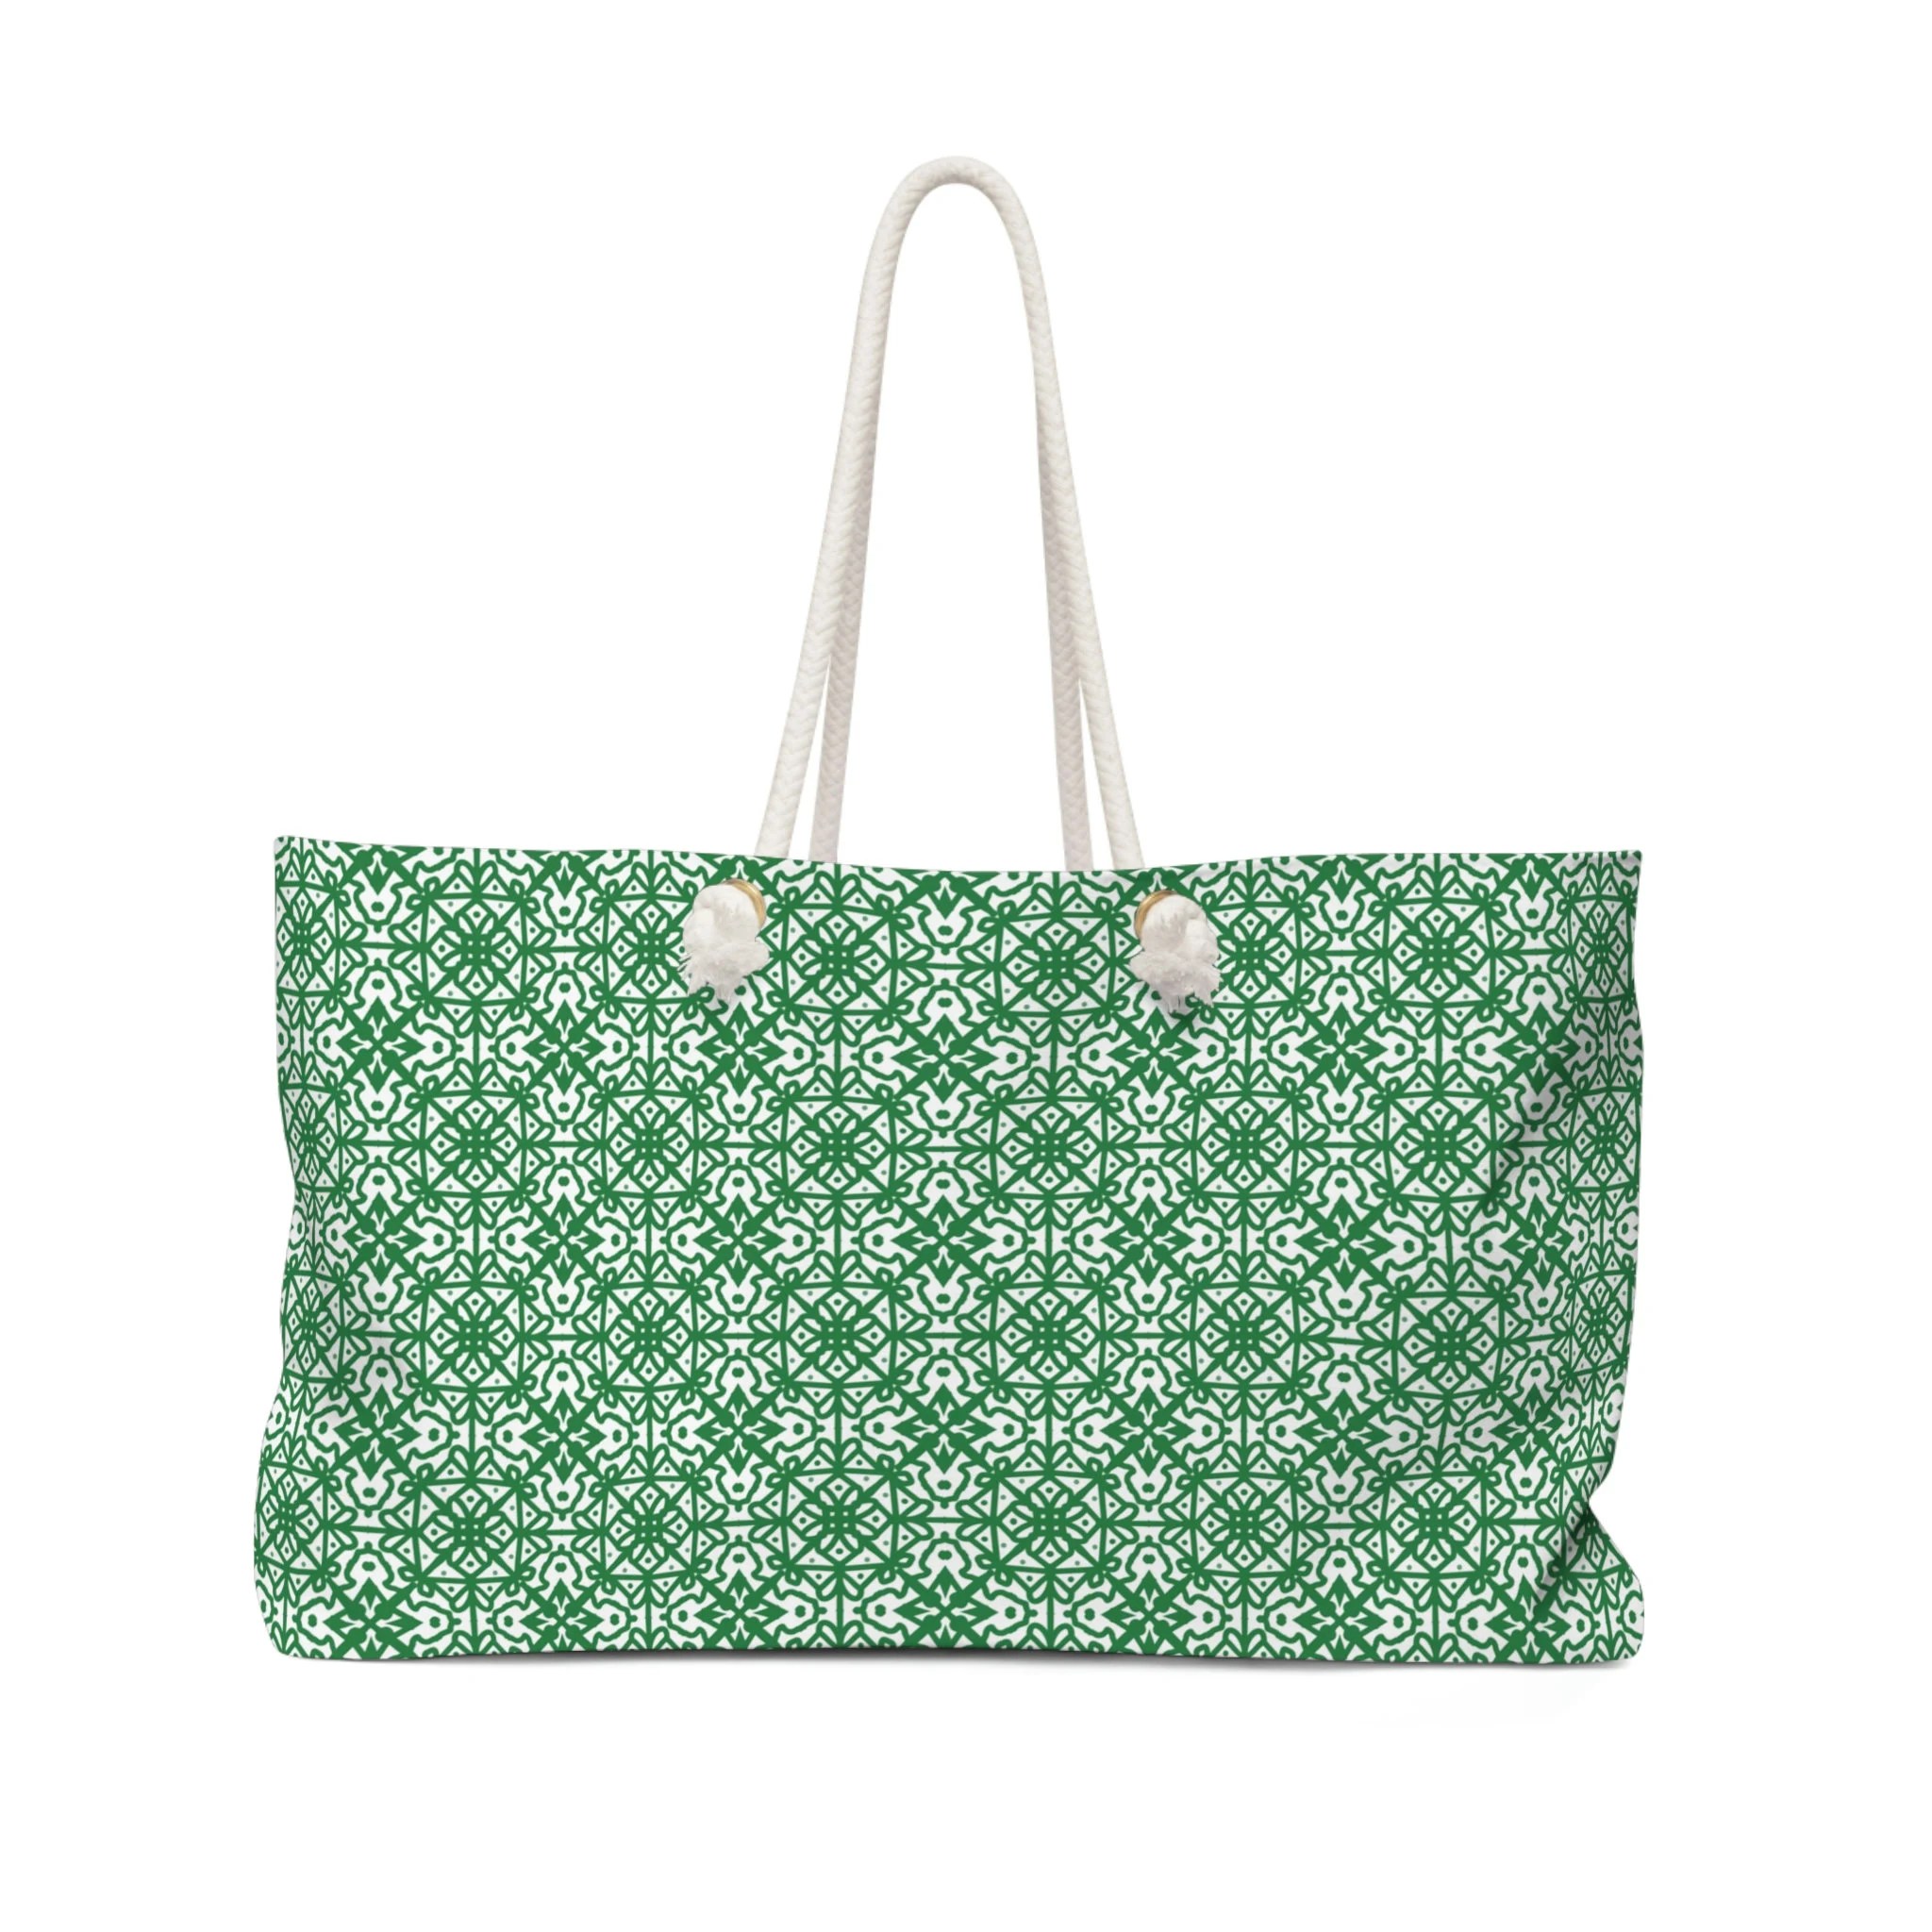 Weekender Tote Bag With Rope Handles + Lined Interior | Green Mandala Design